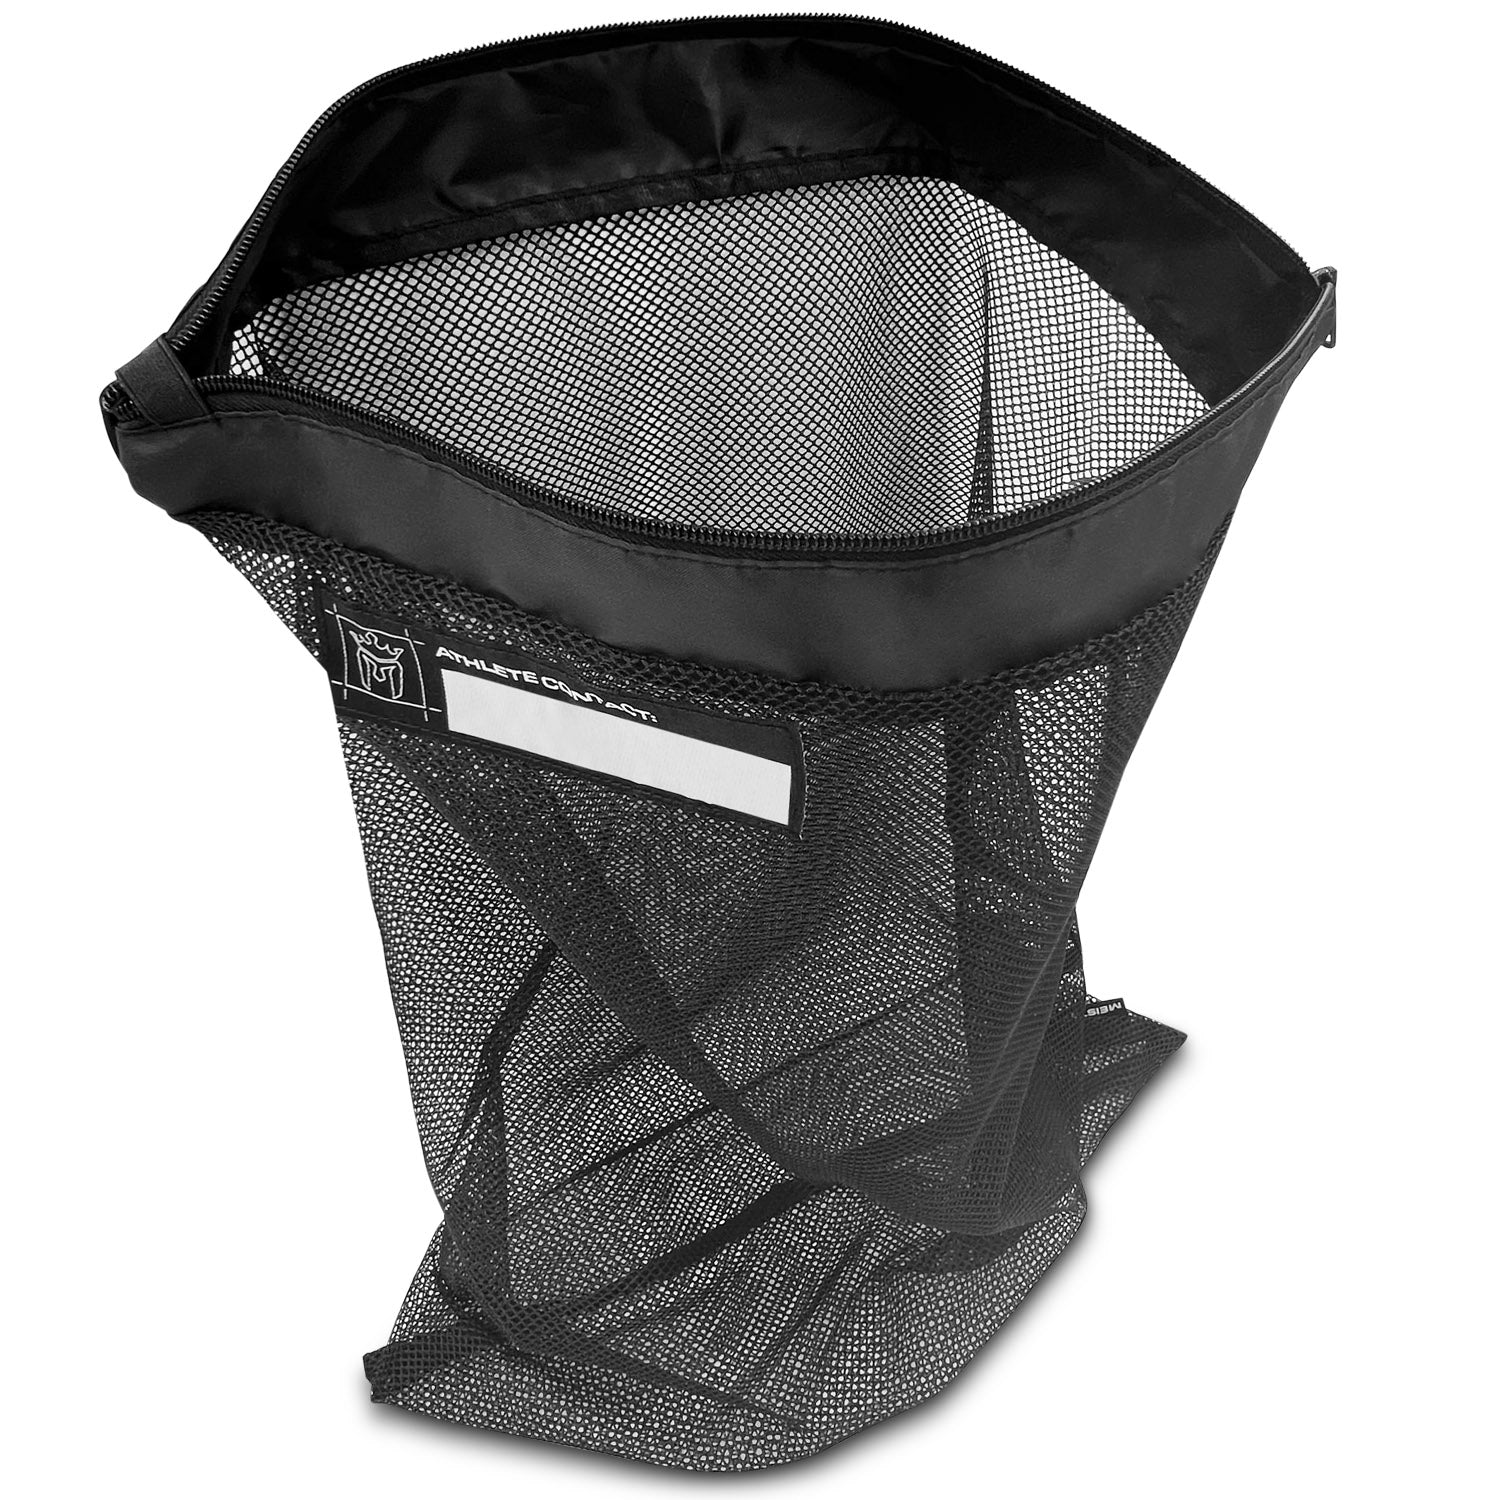 Meister Athlete XL Wash Bag w/ Zipper Lock for Uniforms & Pads